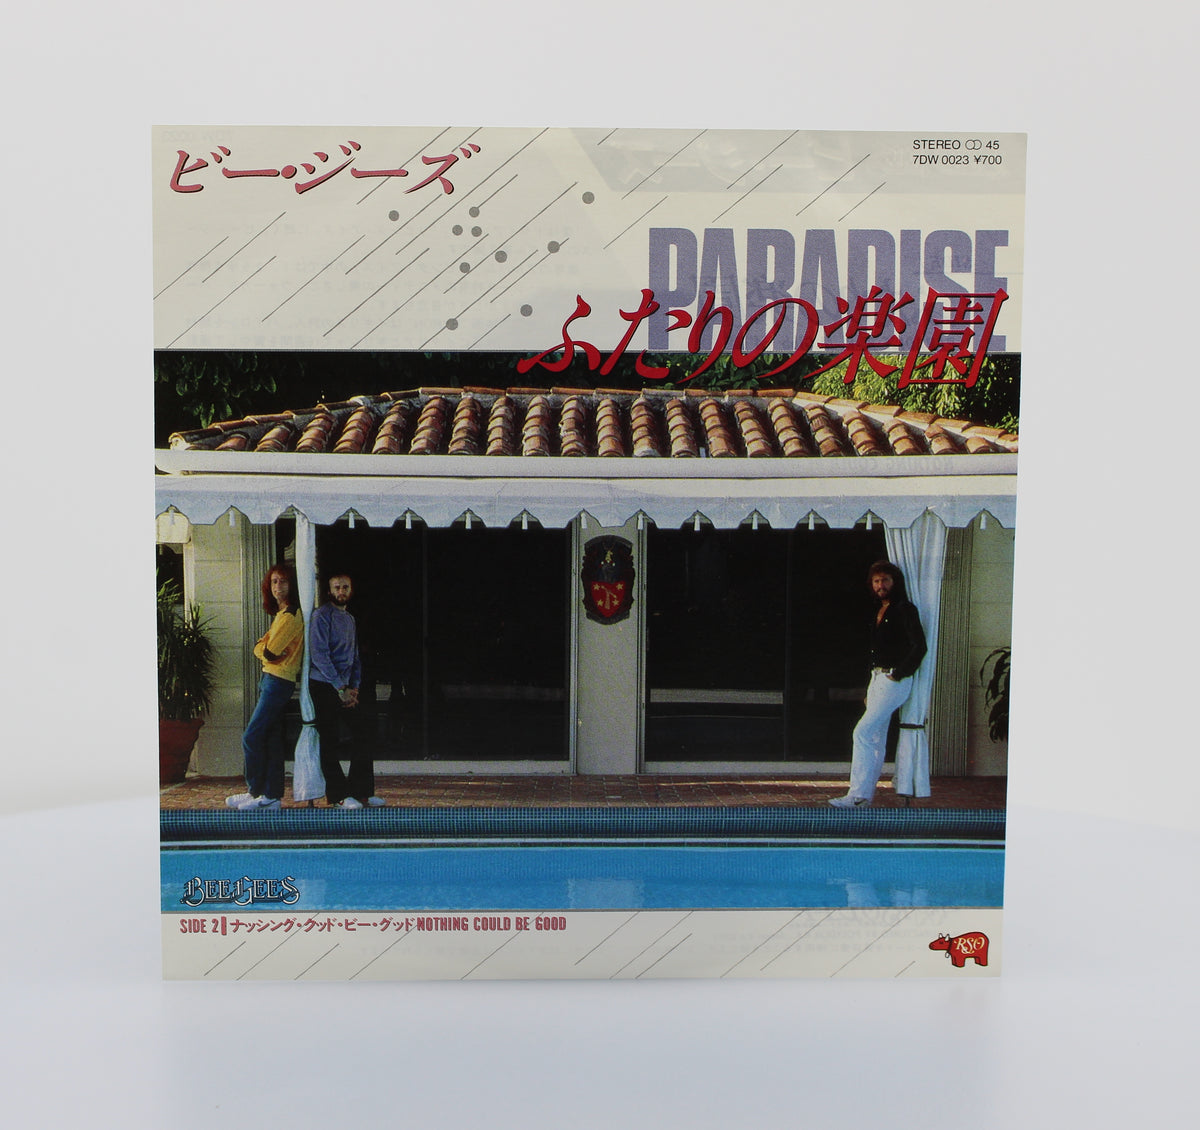 Bee Gees - Paradise, Vinyl single 45rpm, Japan 1982